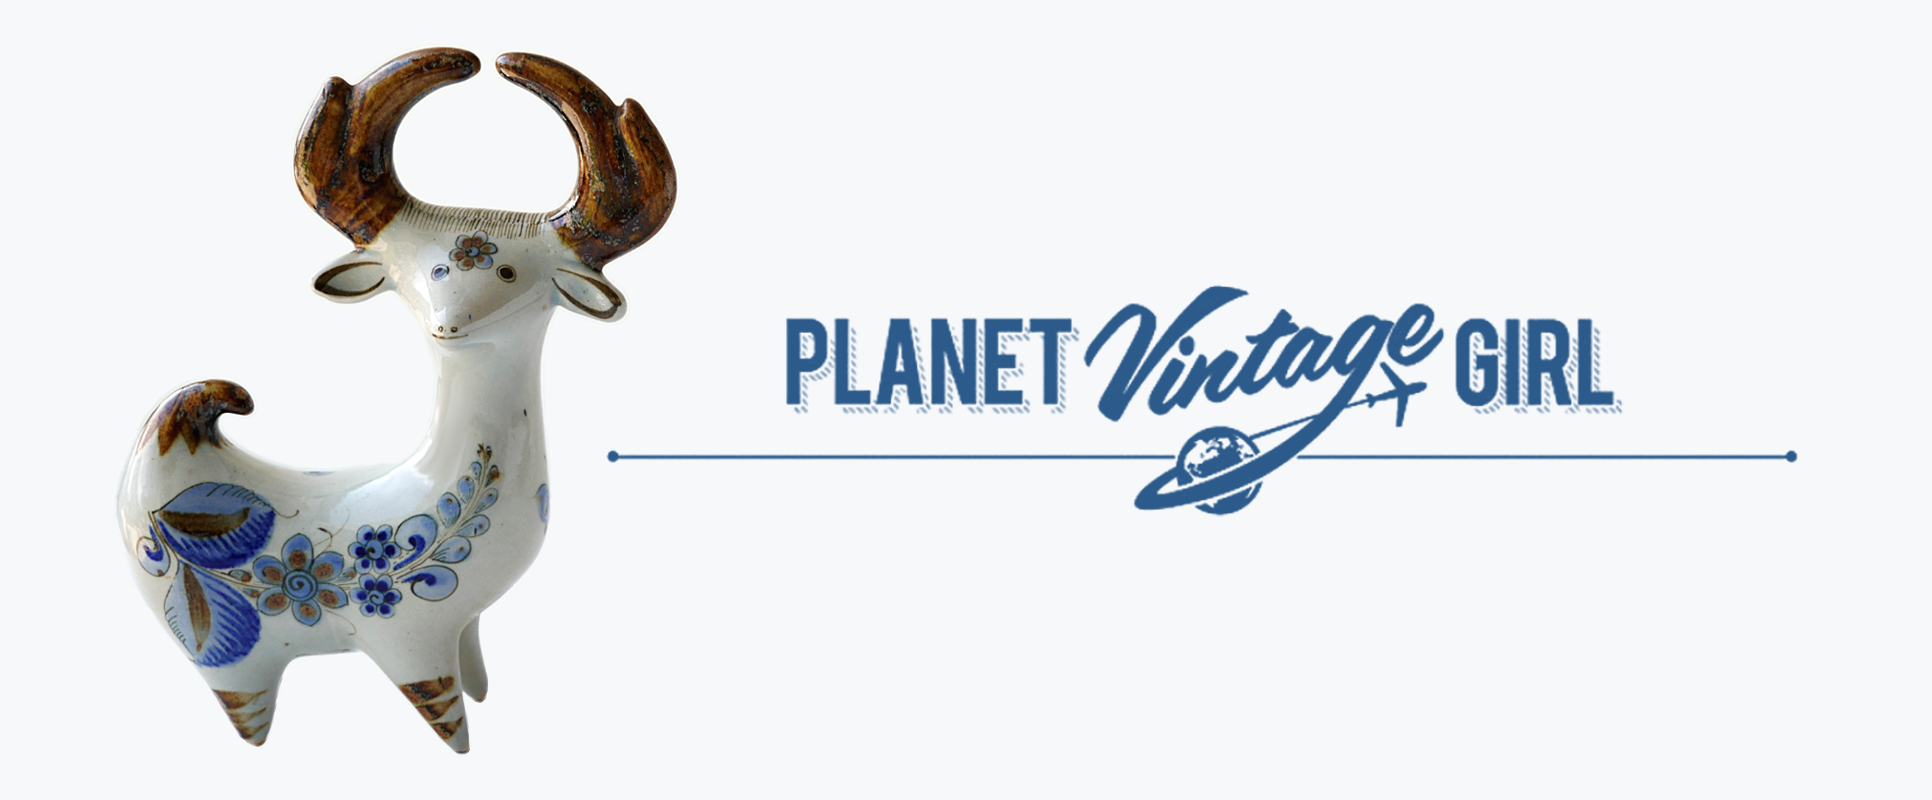 Planet Vintage Girl logo